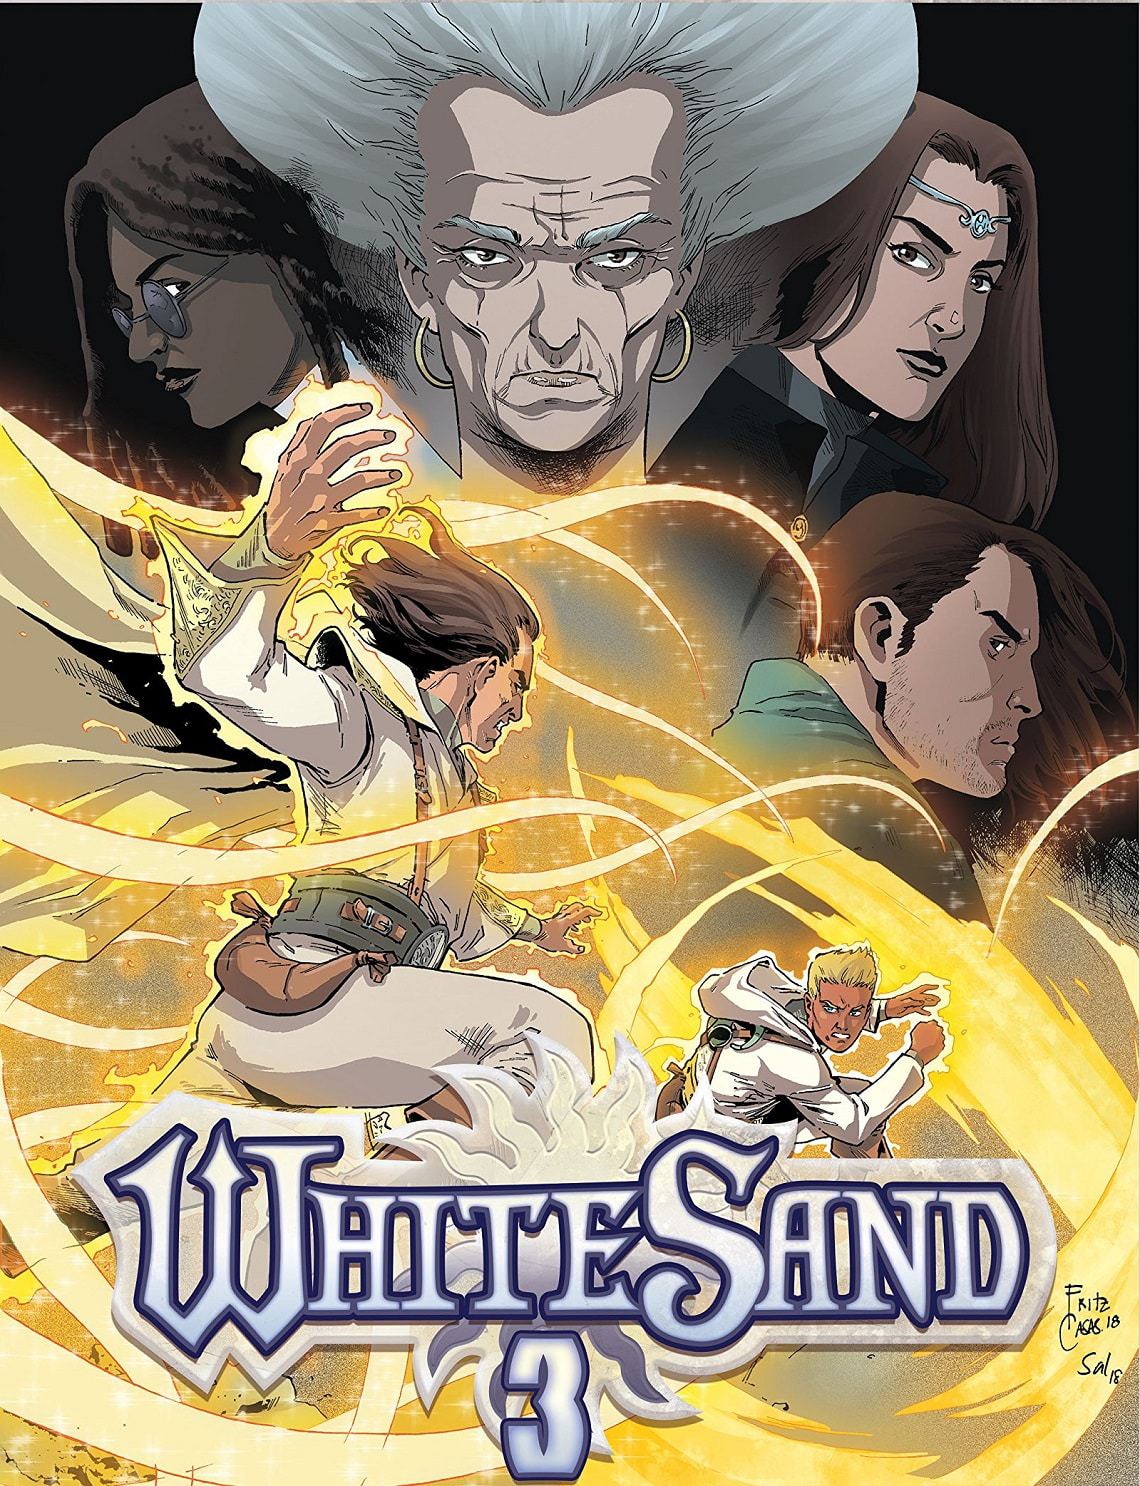 White Sand Volume 3 Audiobook Free